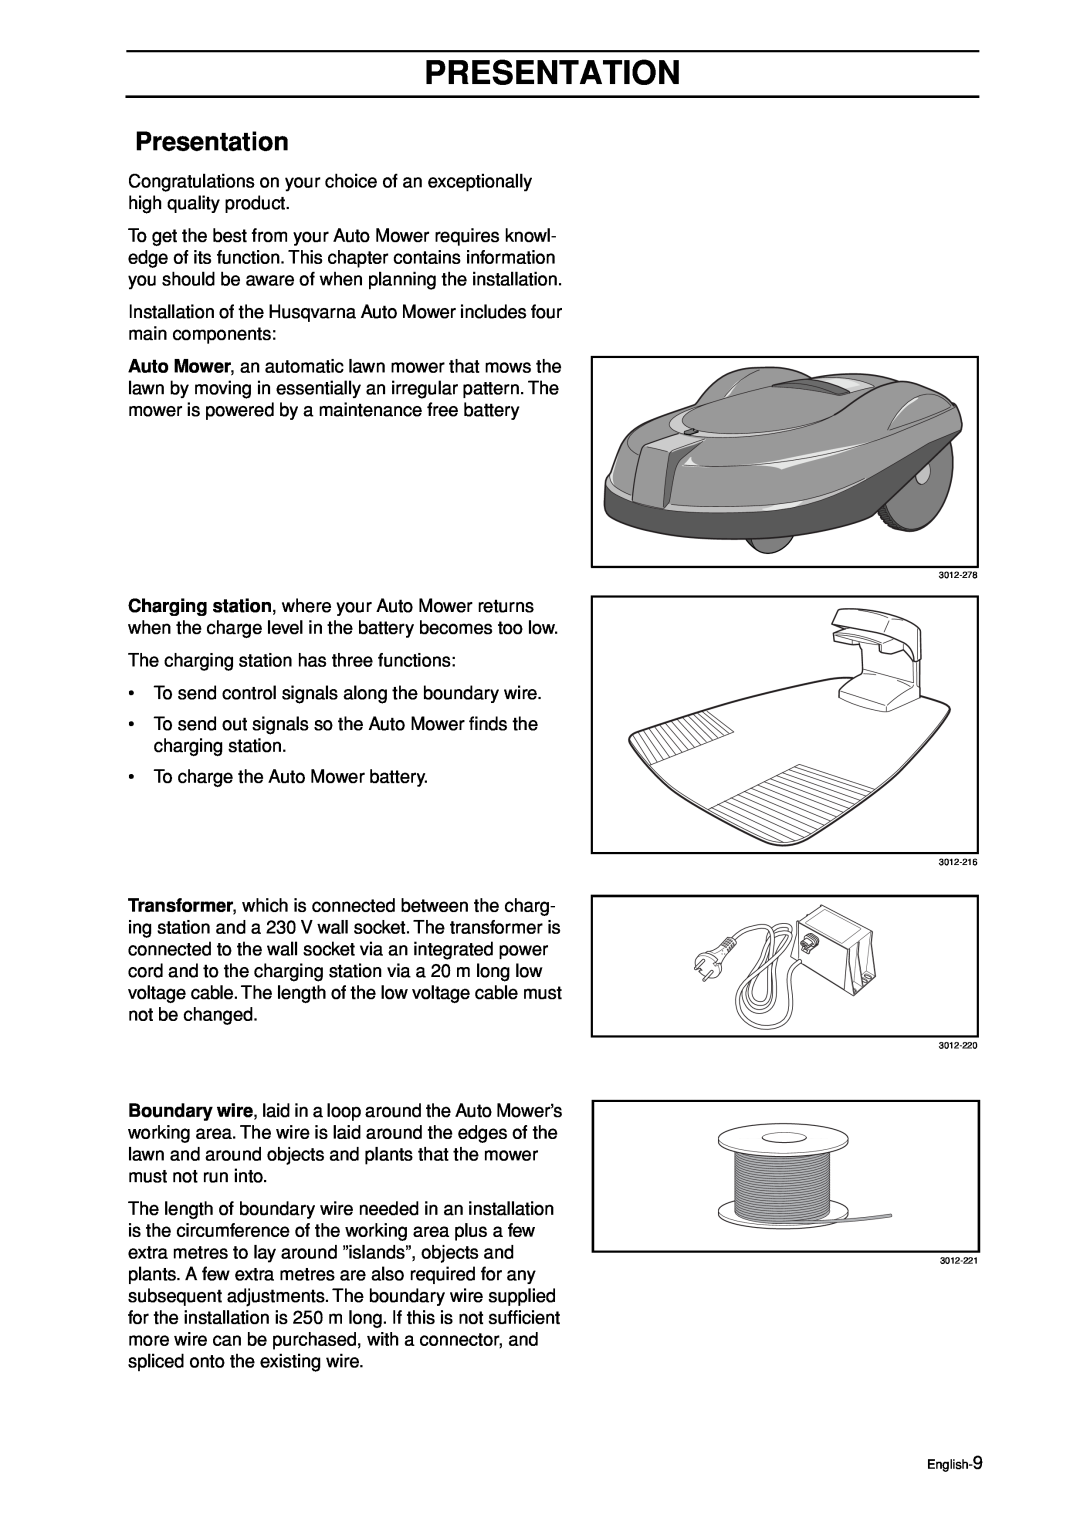 Husqvarna Auto Mower manual Presentation 